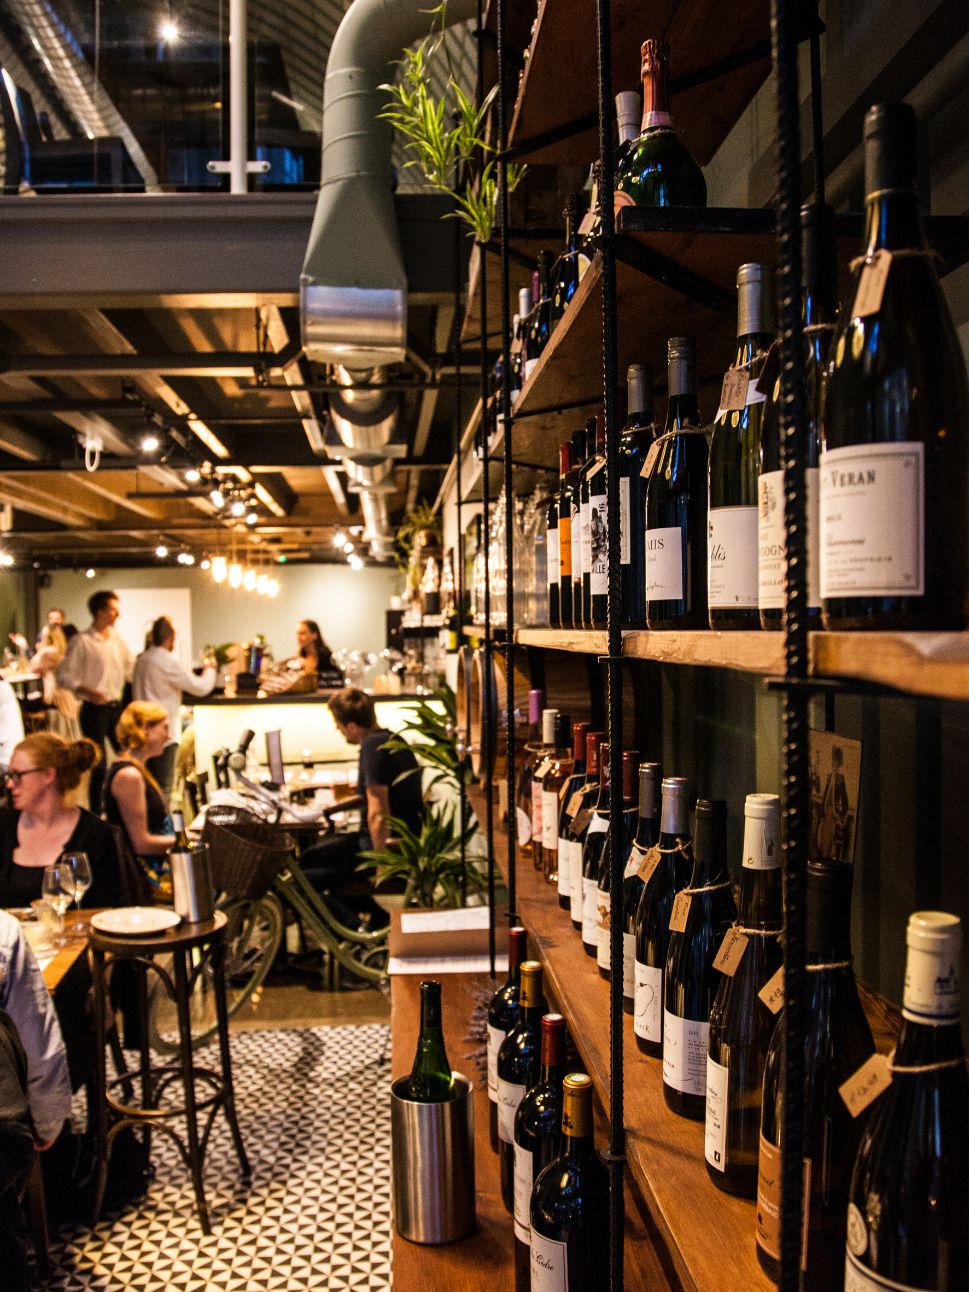 Selection of wines on shelves inside The French Quarter restaurant